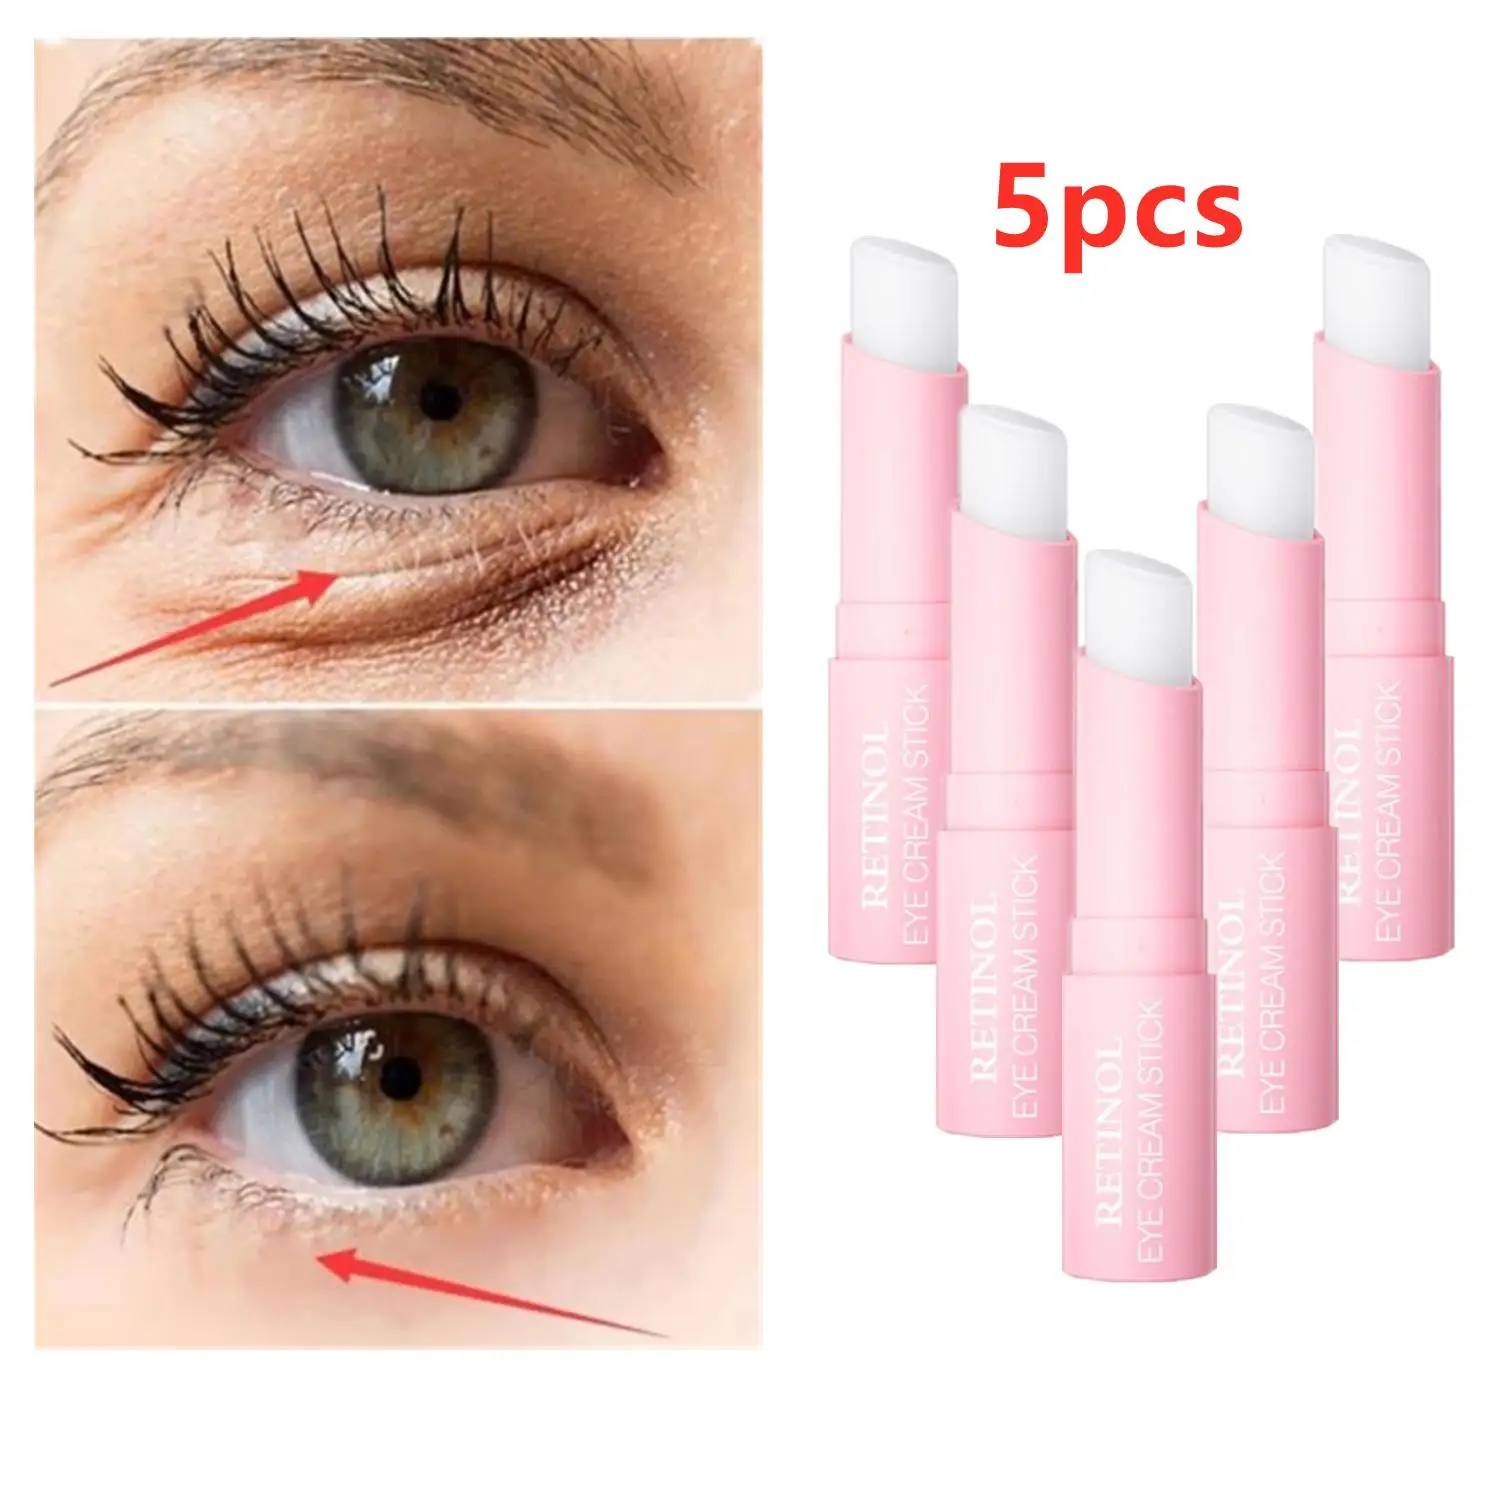 

5pcs EELHOE Anti-wrinkle Eye Cream Retinol Anti Puffiness Remove Dark Circles Eye Bags Stick Fade Fine Line Moisturizing